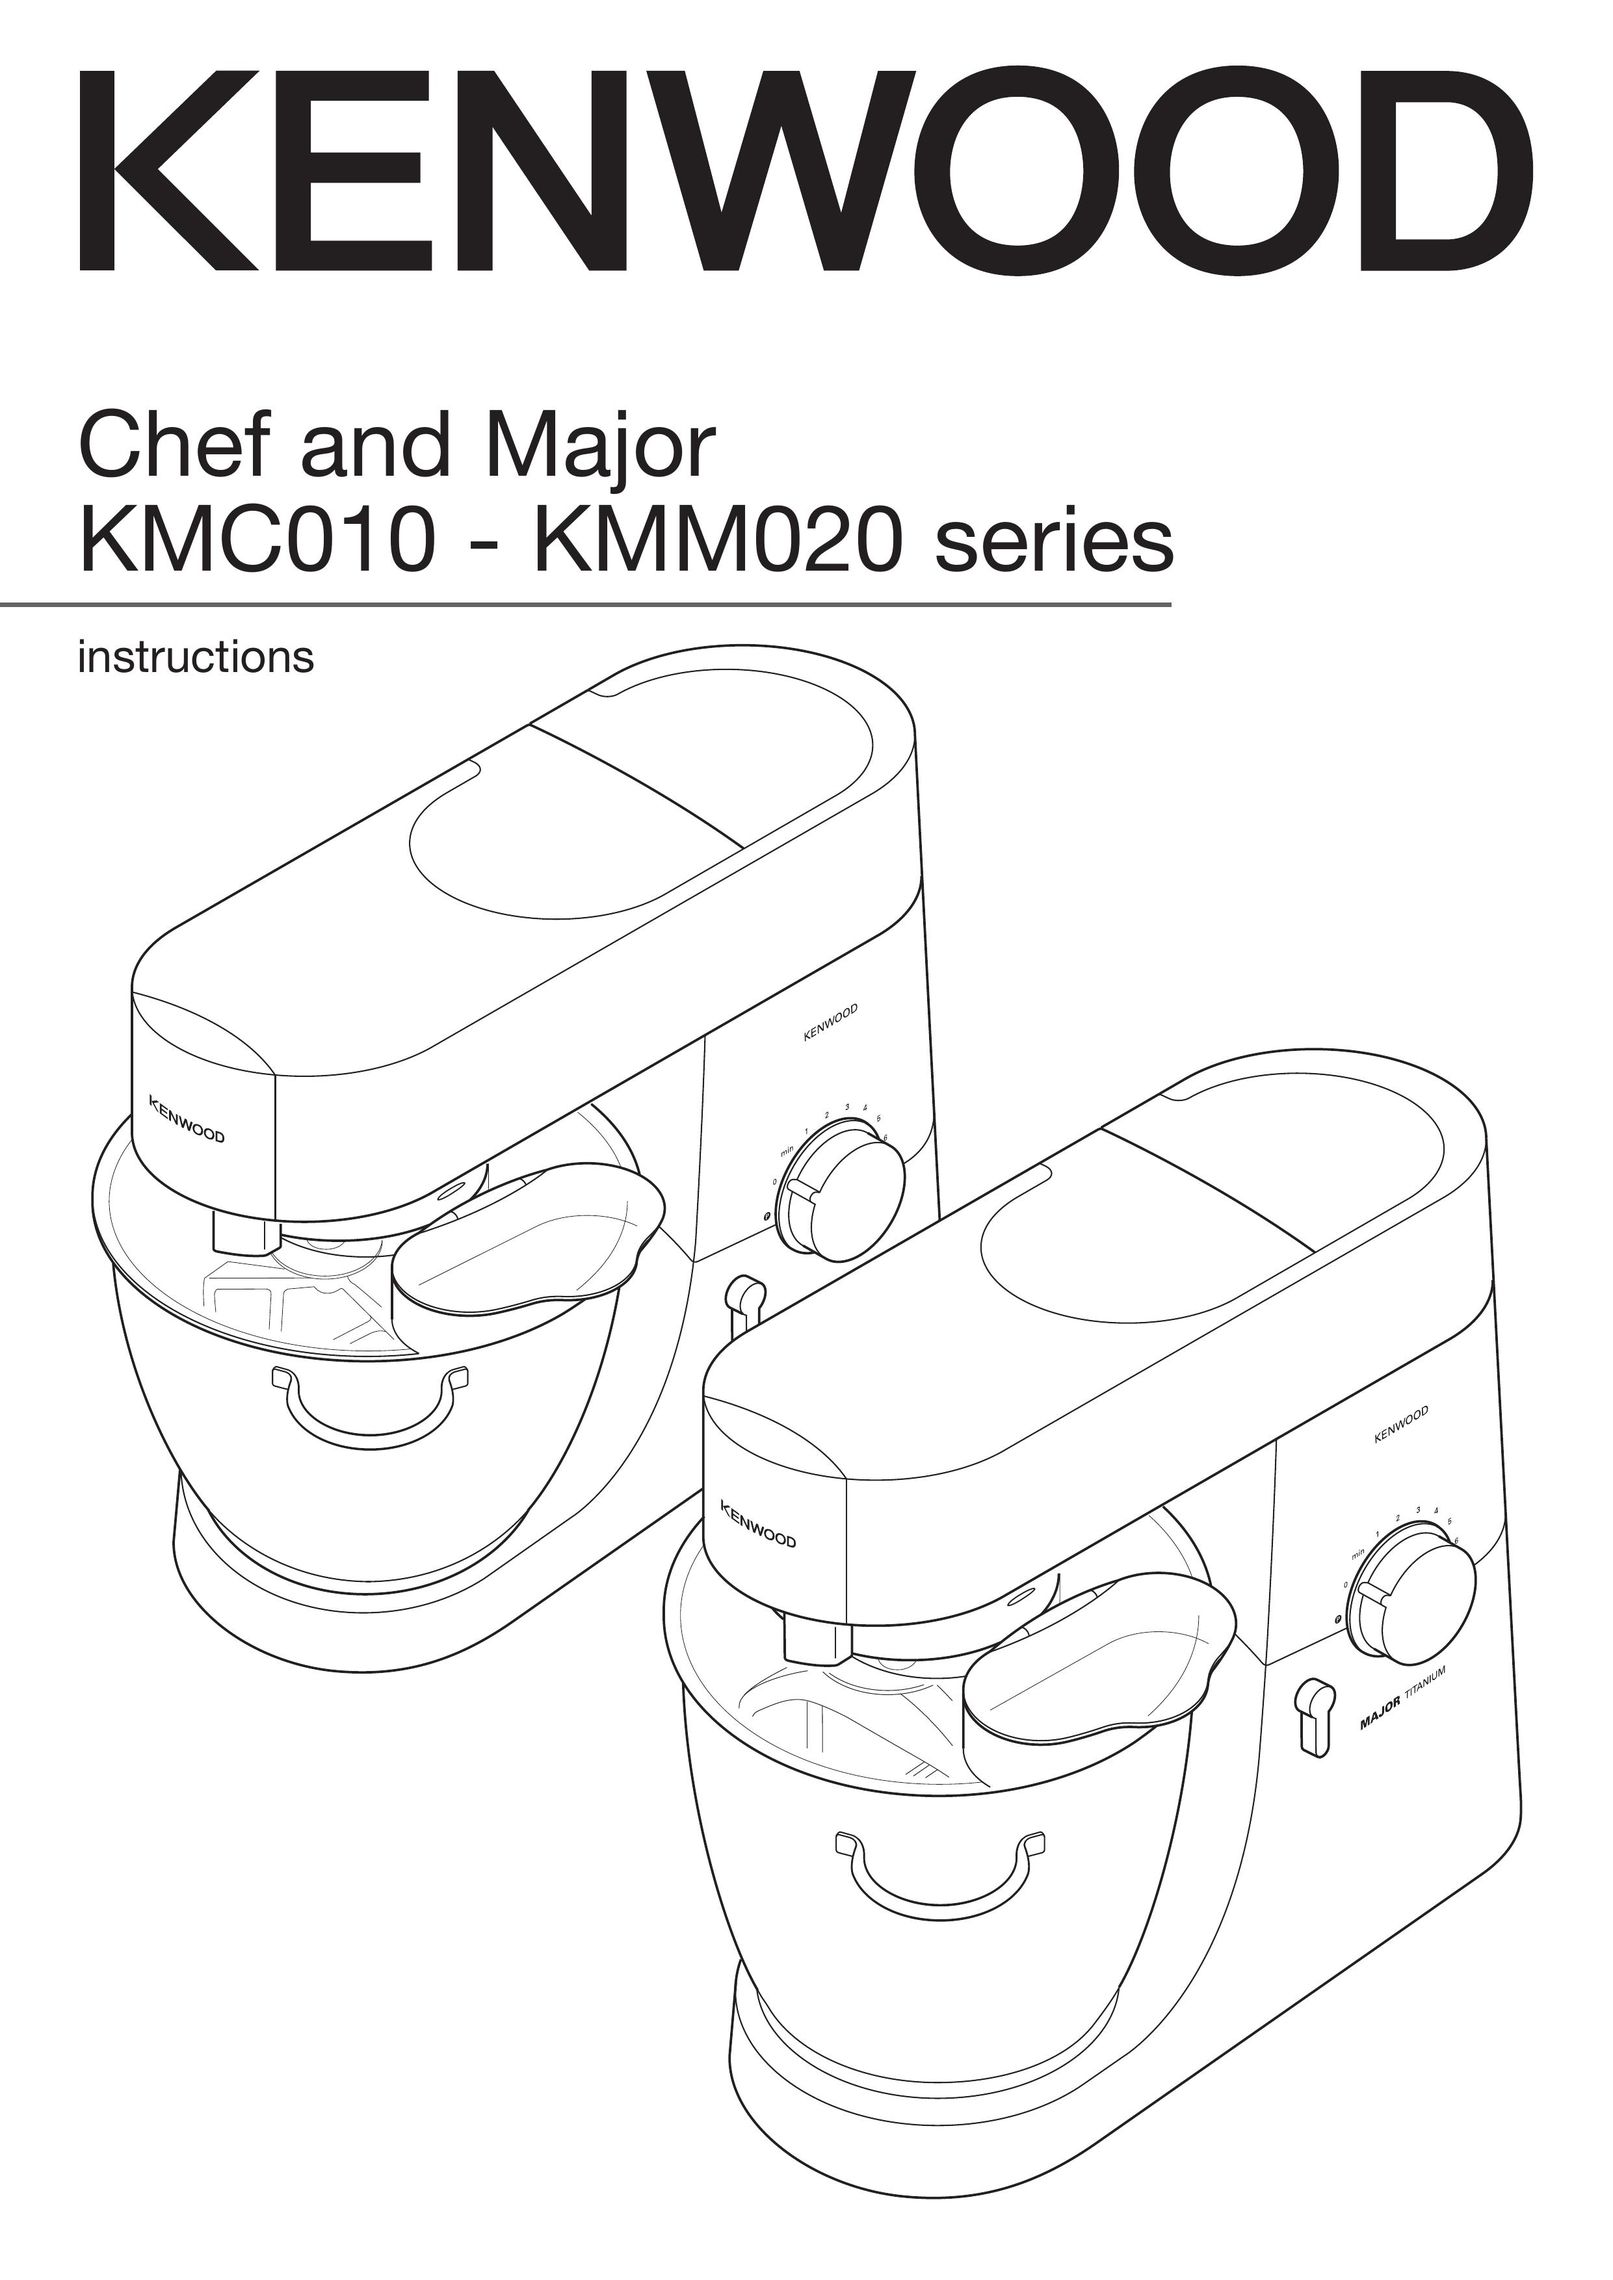 Kenwood KMM020 Mixer User Manual